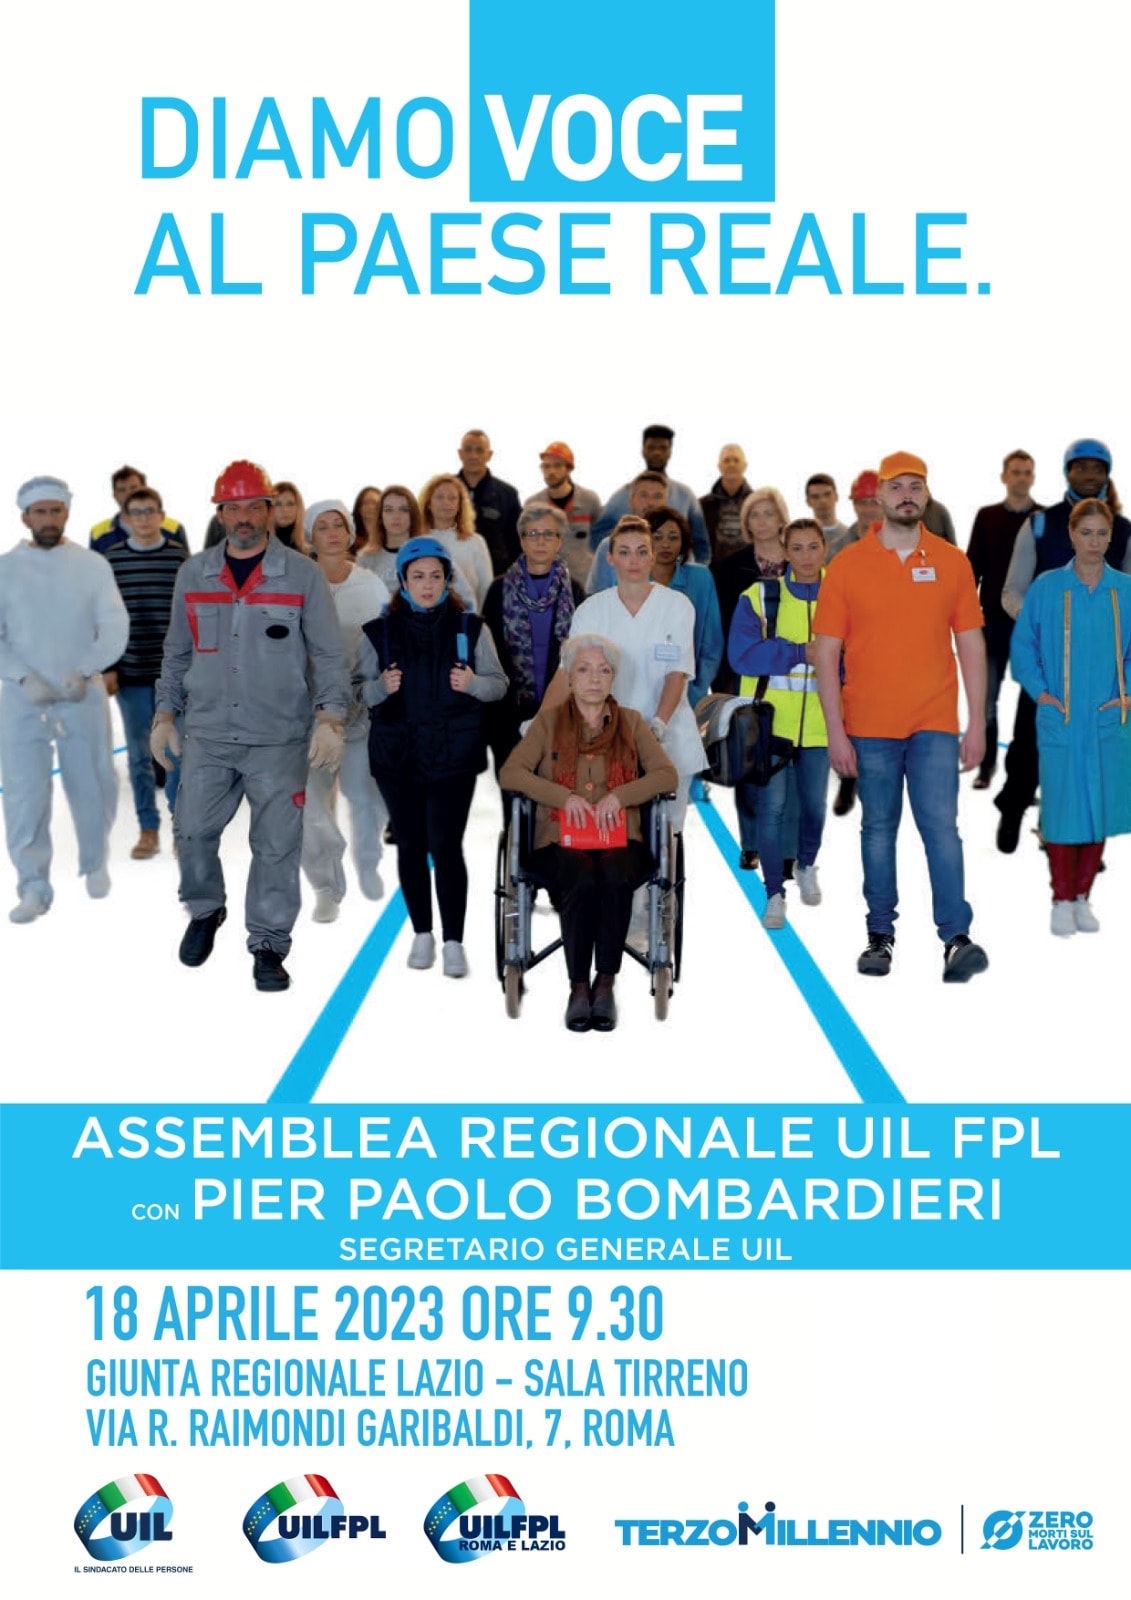 18 Aprile.Assemblea regionale UIL-FPL "Diamo voce al paese reale"